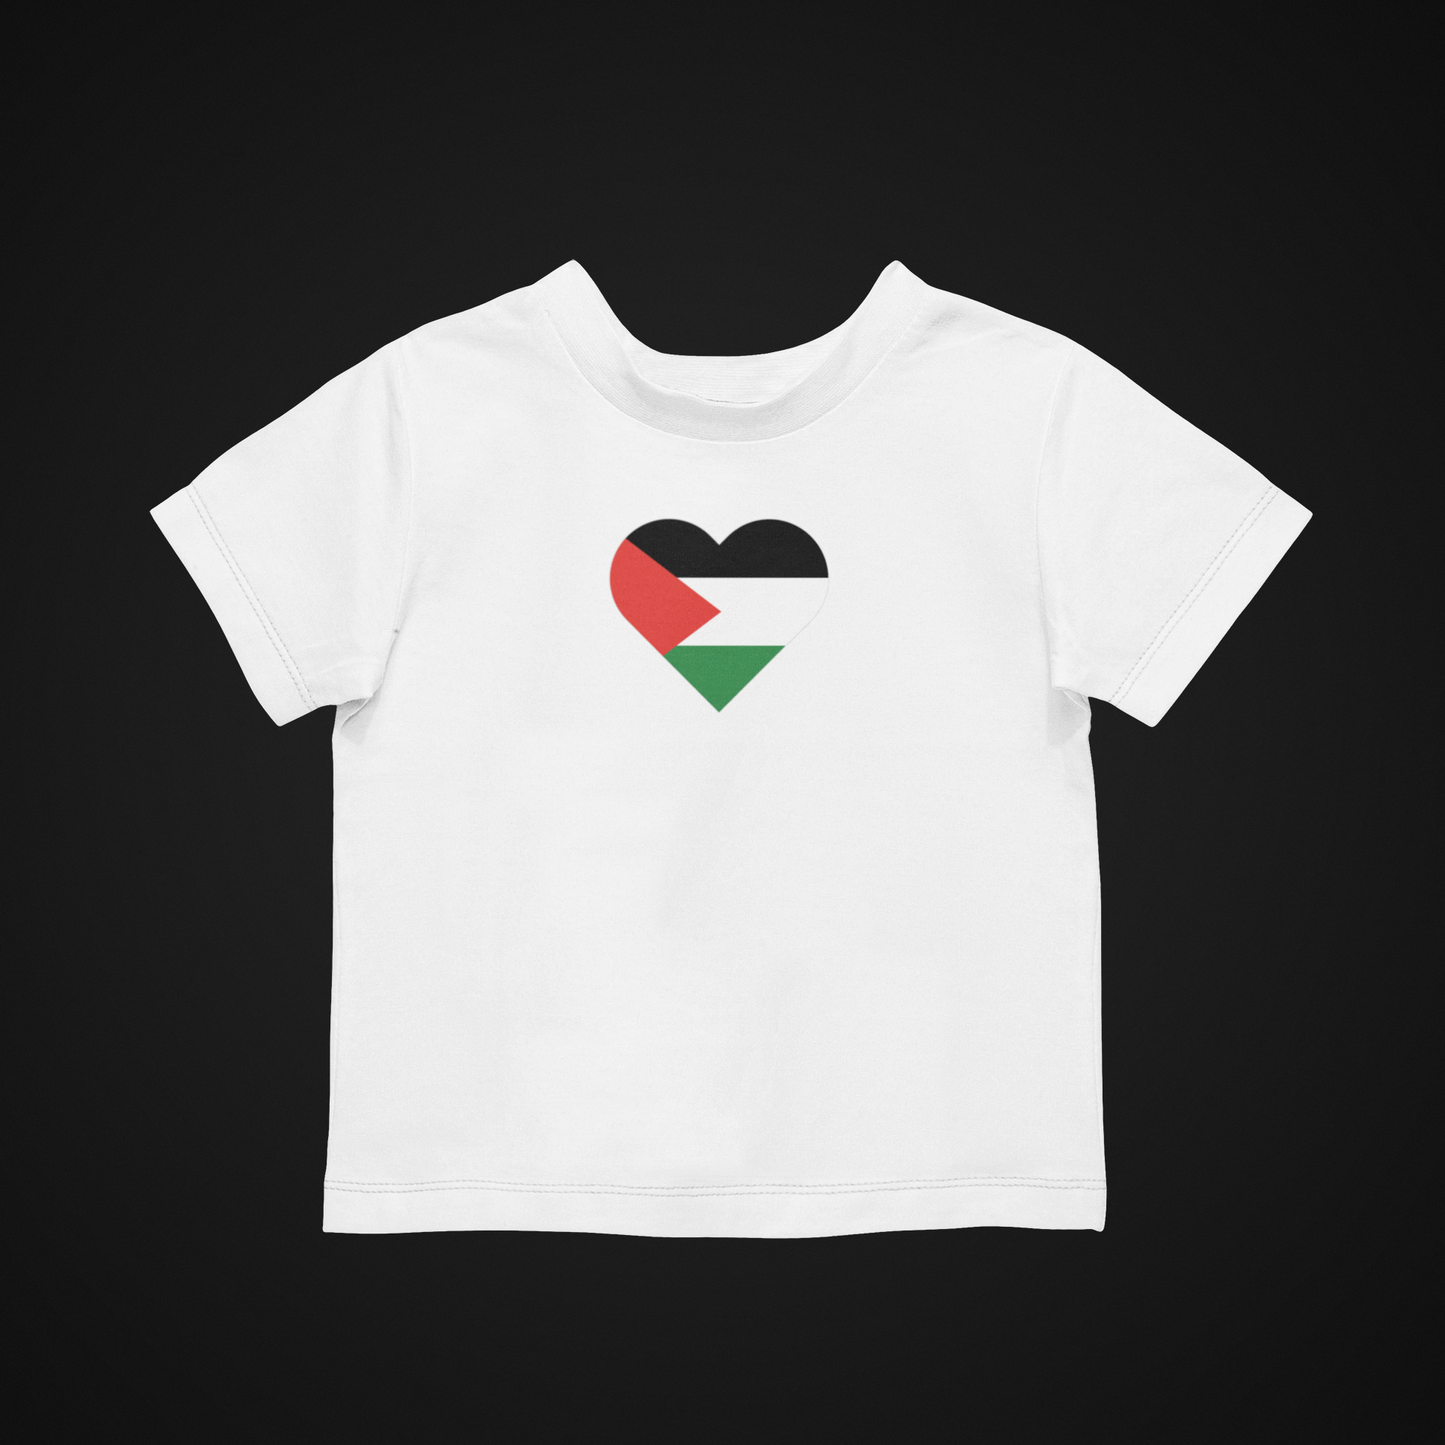 Free Palestine - All Tamariki Deserve A Childhood - Childrens Tee